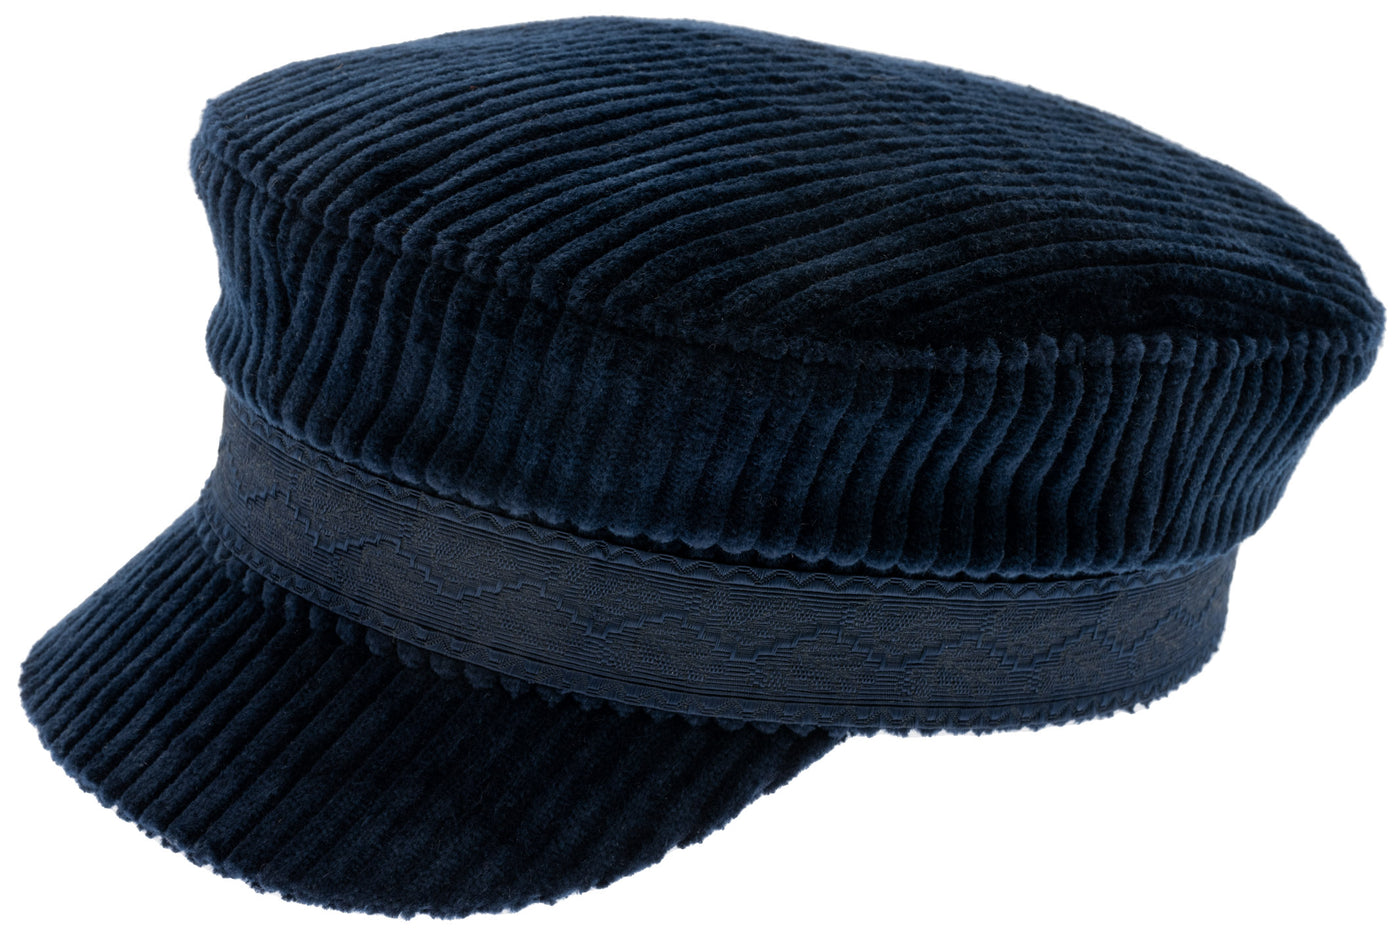 Blue Breton cap in corduroy